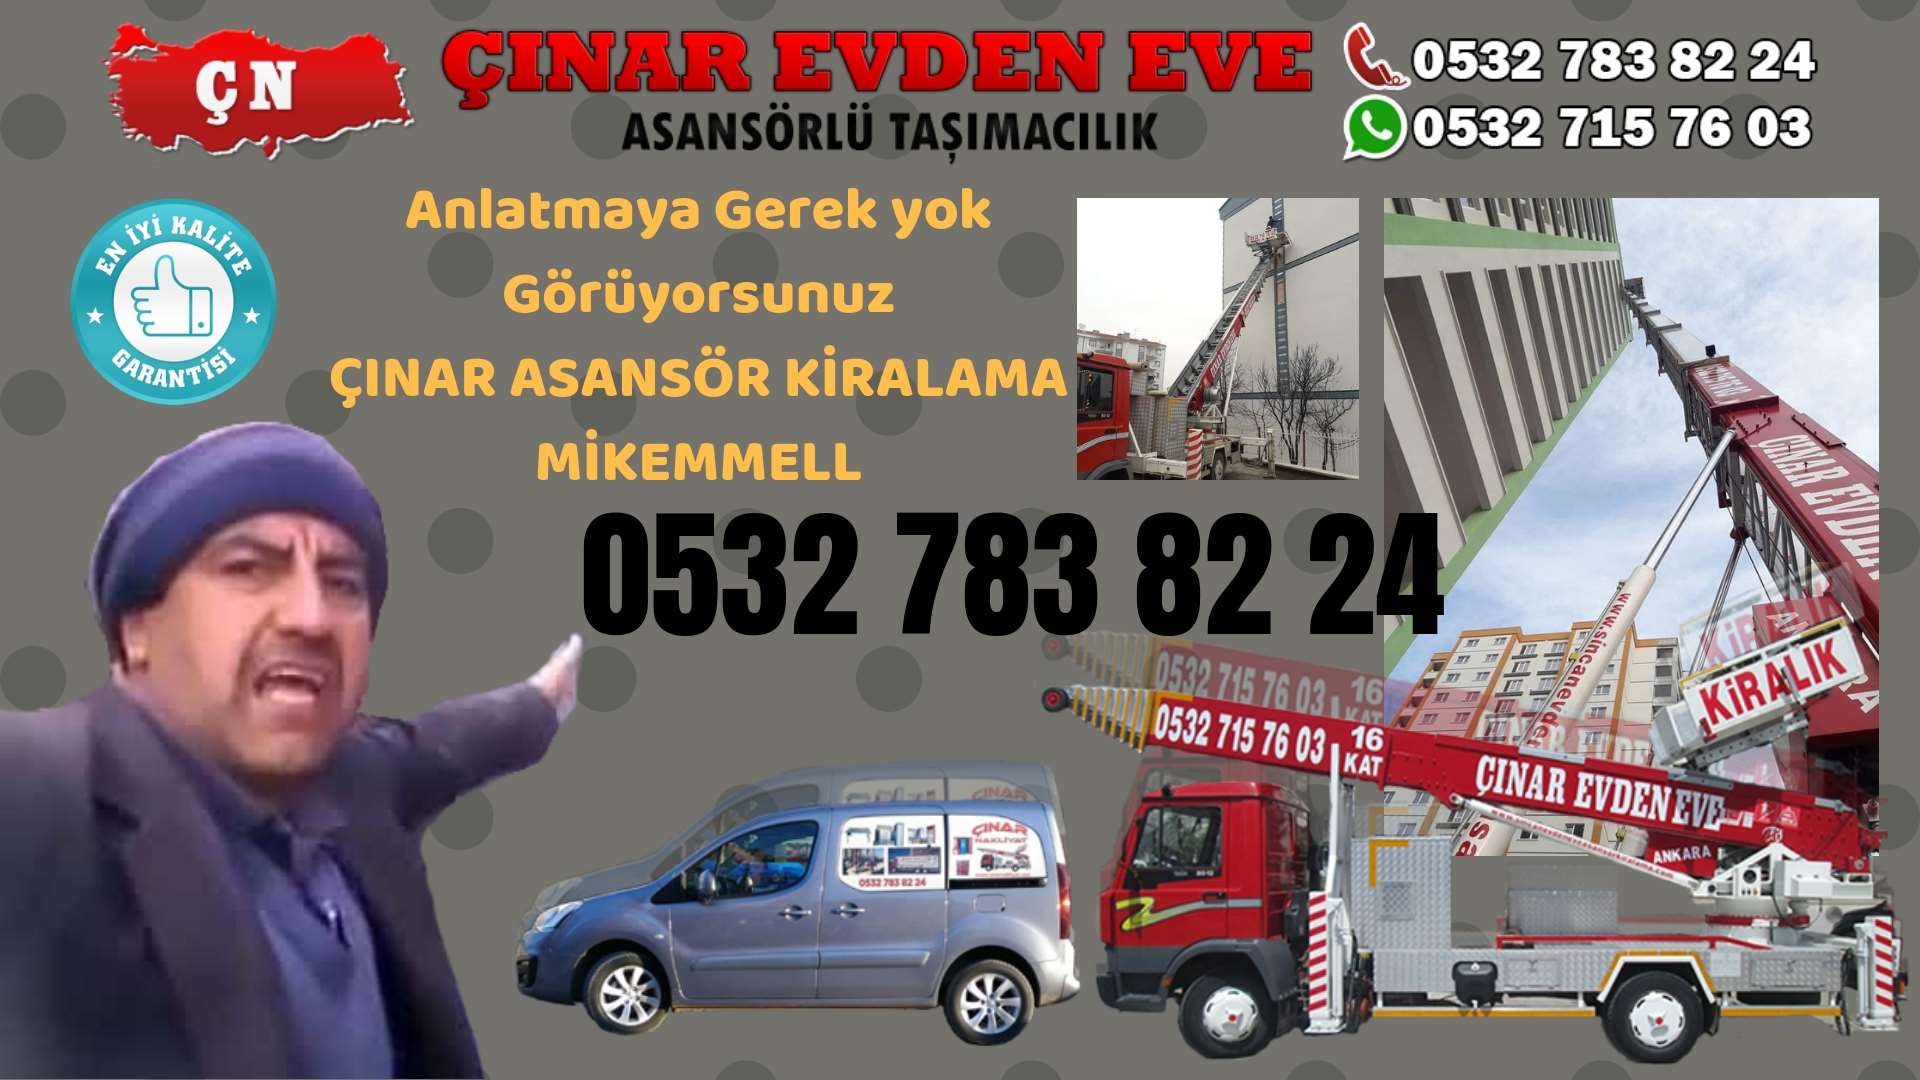 Ankara Sincan Ankara asansör kiralama hizmeti sizlere başta kalite ve maddi acıdan tasarruf 0532 715 76 03